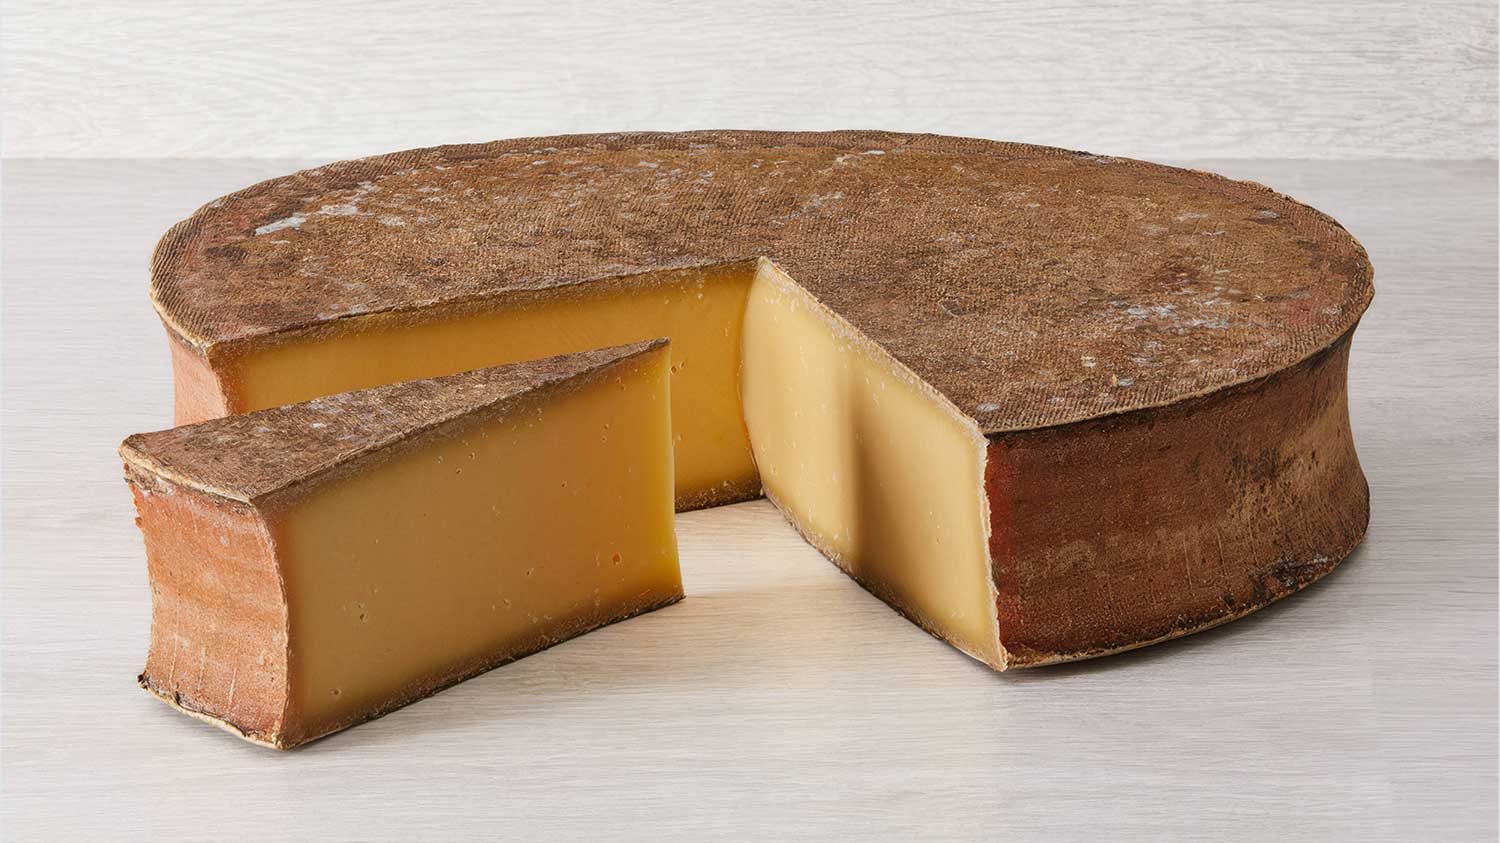 Cheeses_in_Season_Abondance_Cow_Cheese_from_France_Seasonal_French_Cheese_in_Dubai_Abu_Dhabi_WISK_UAE.jpg